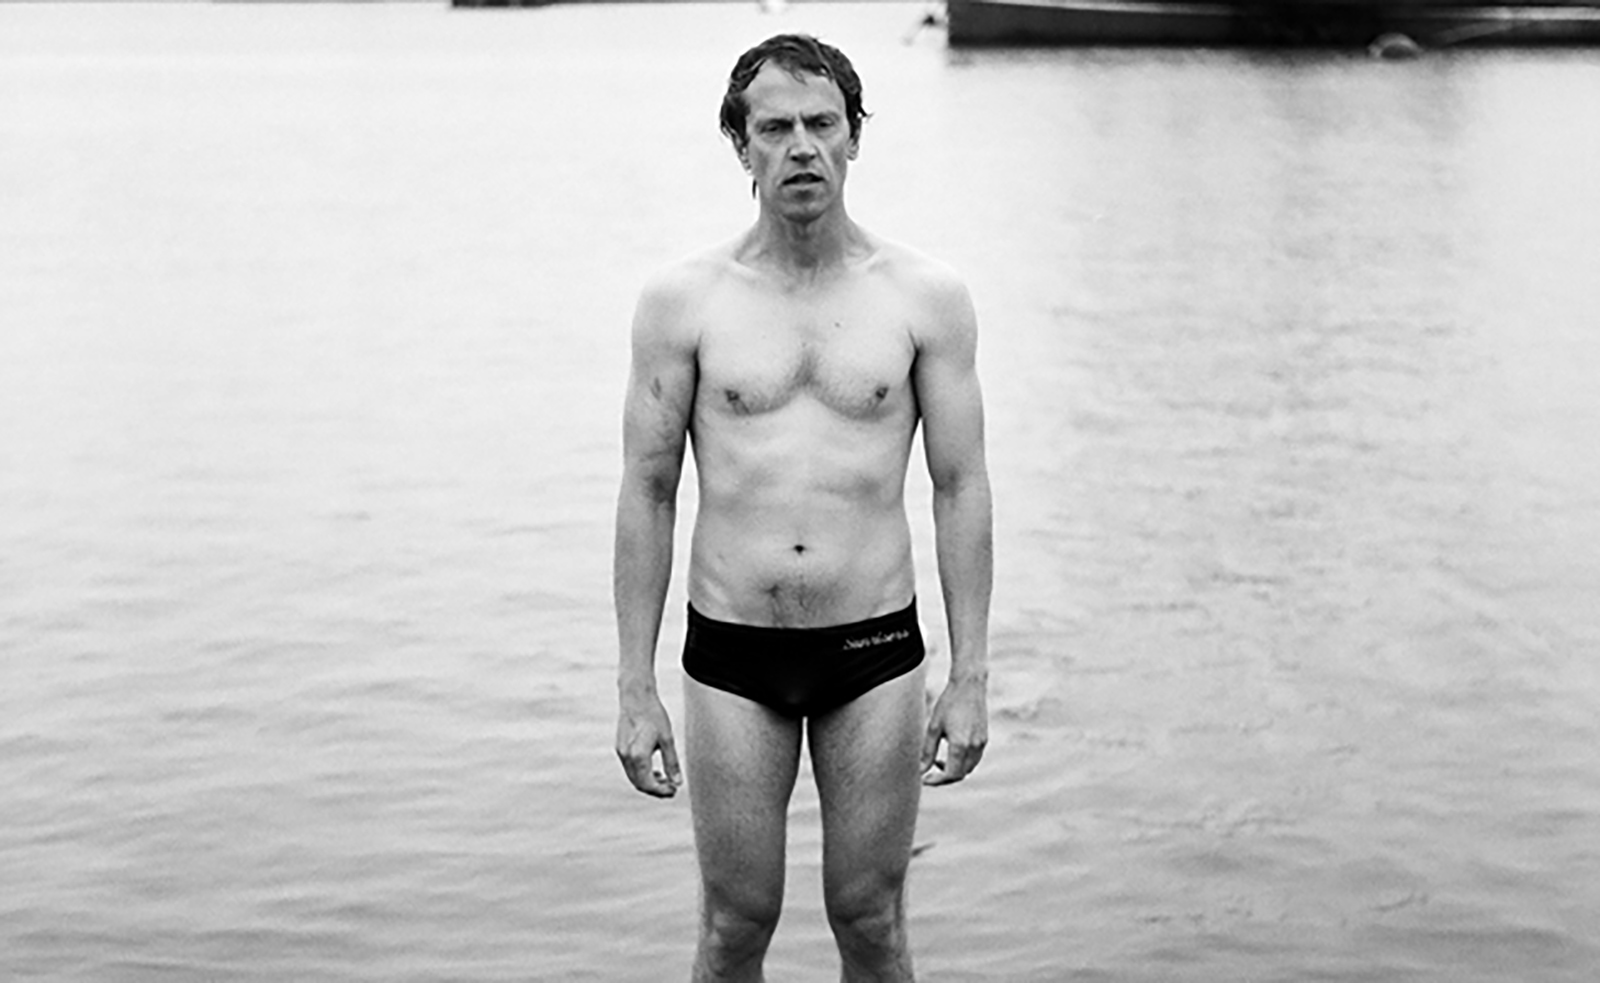 Pawel Kruk, Winning the Water, 2010